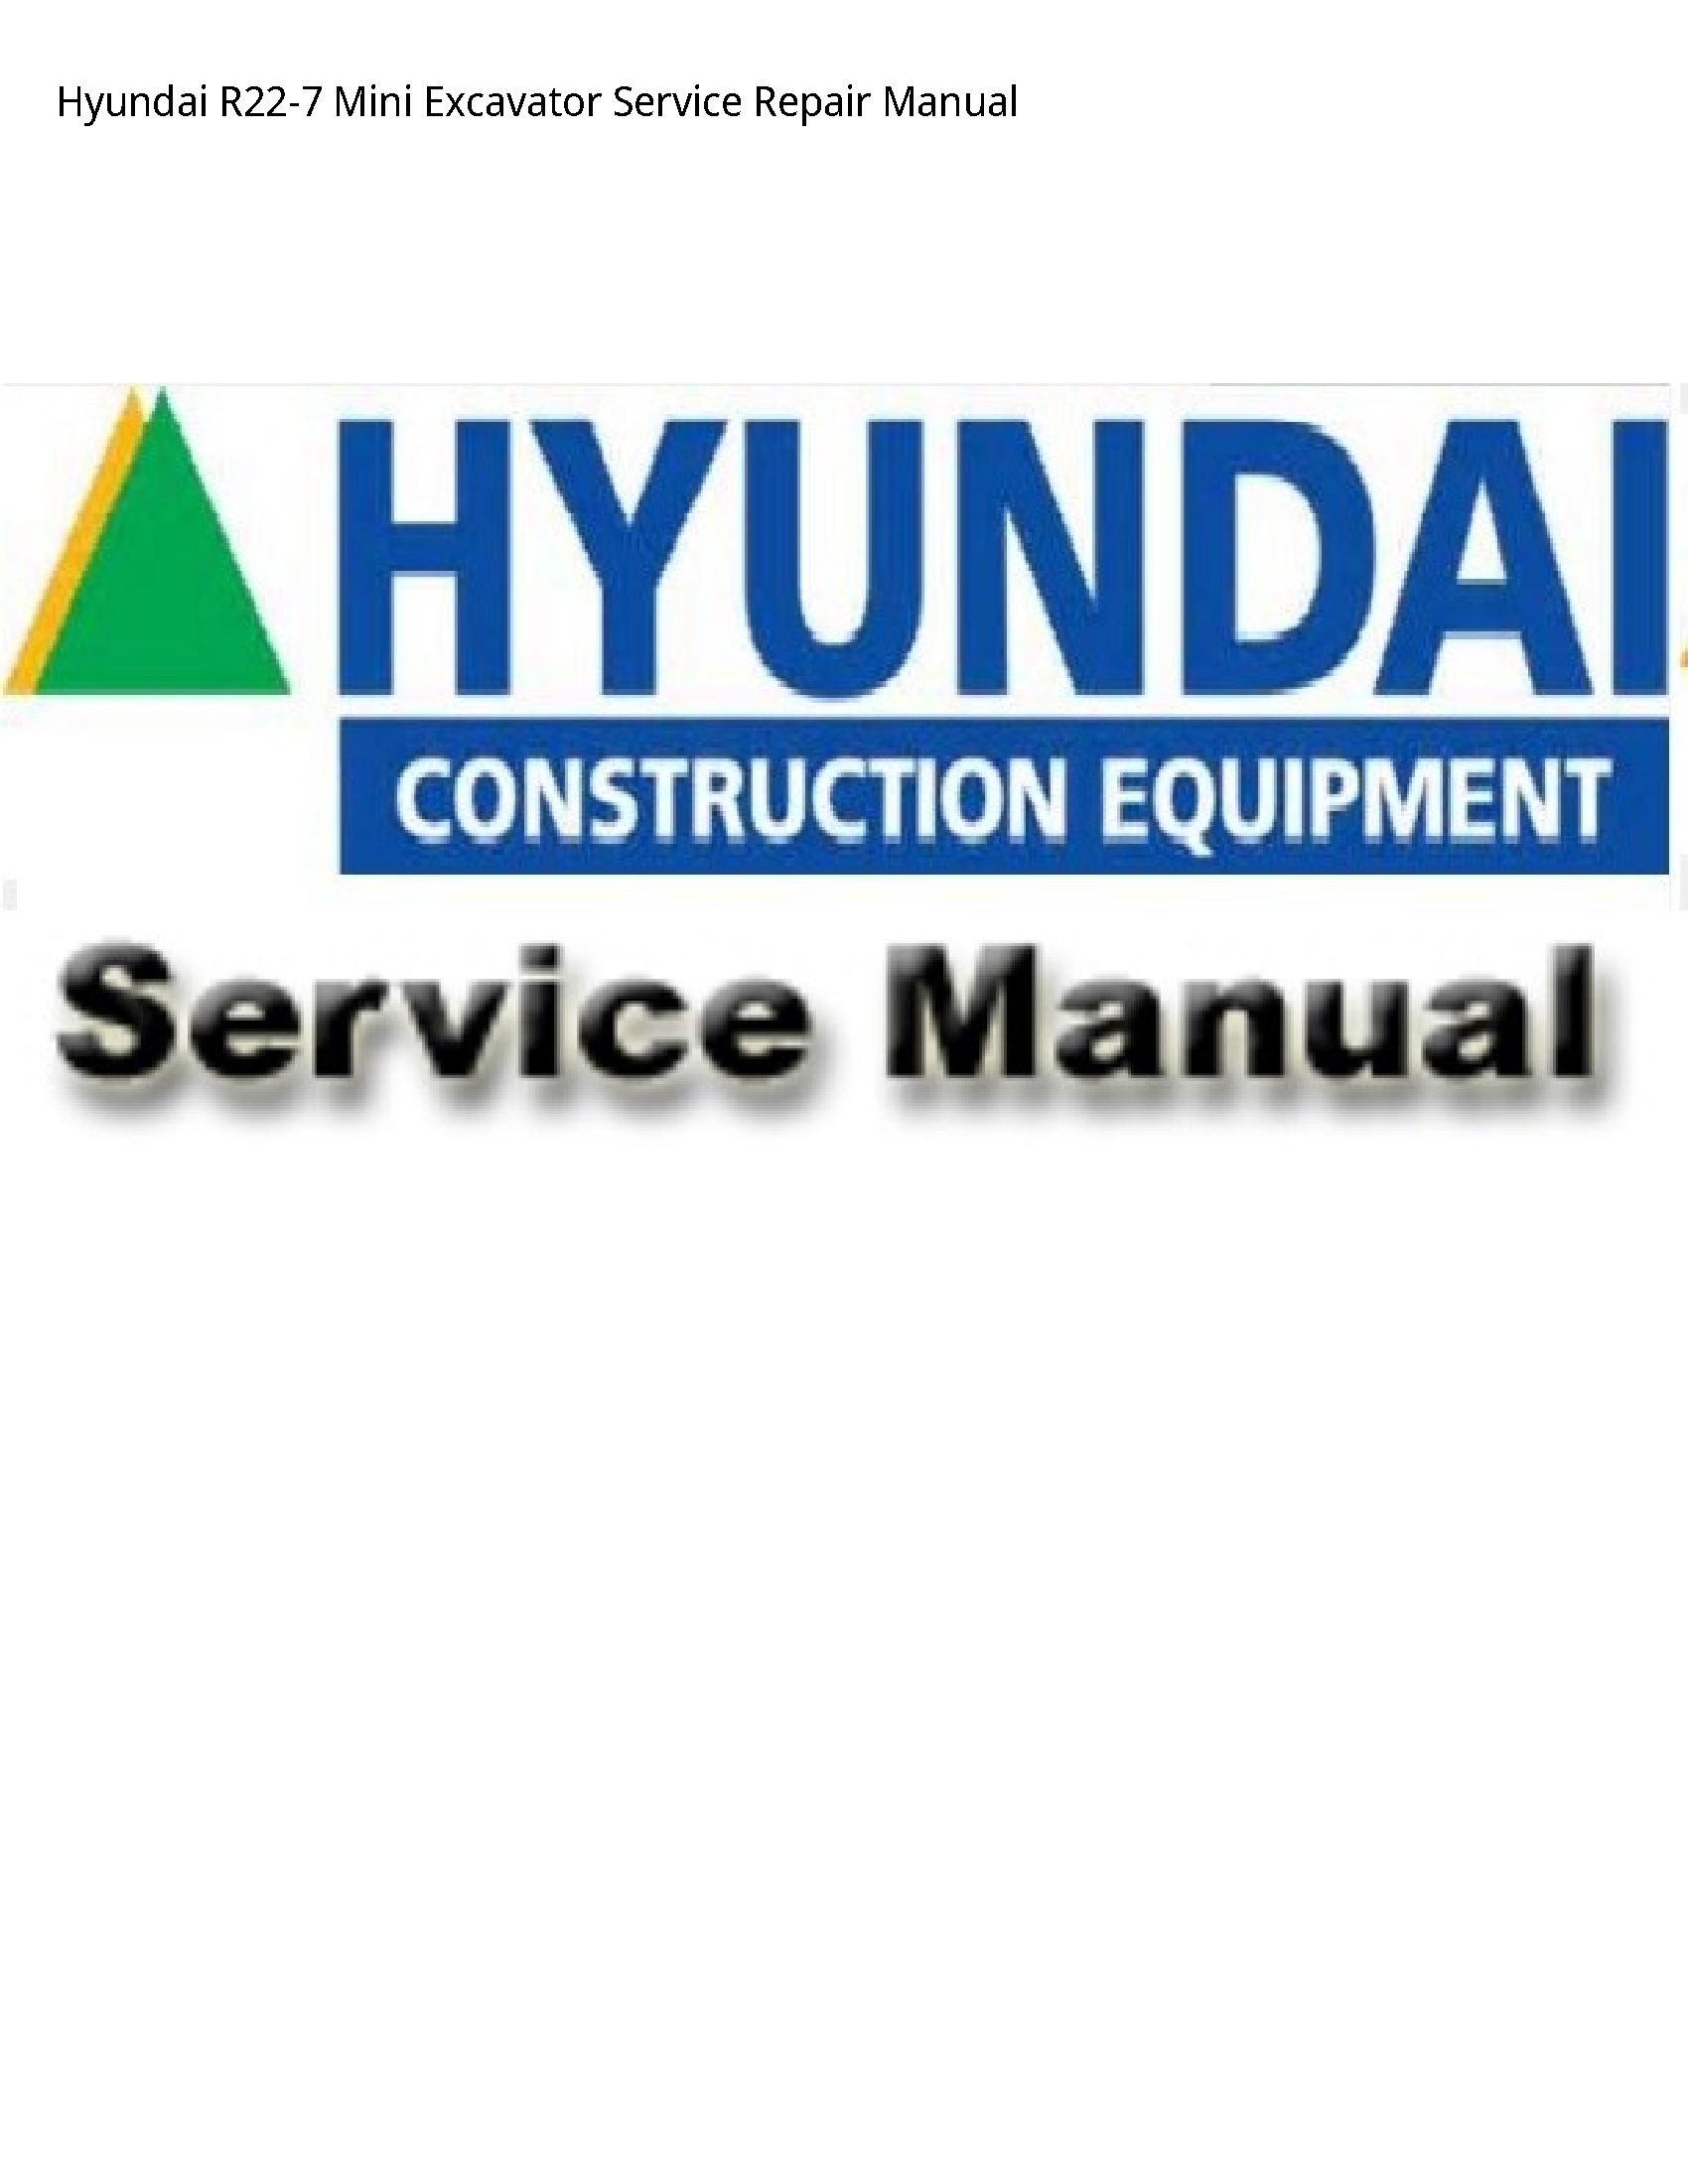 Hyundai R22-7 Mini Excavator manual